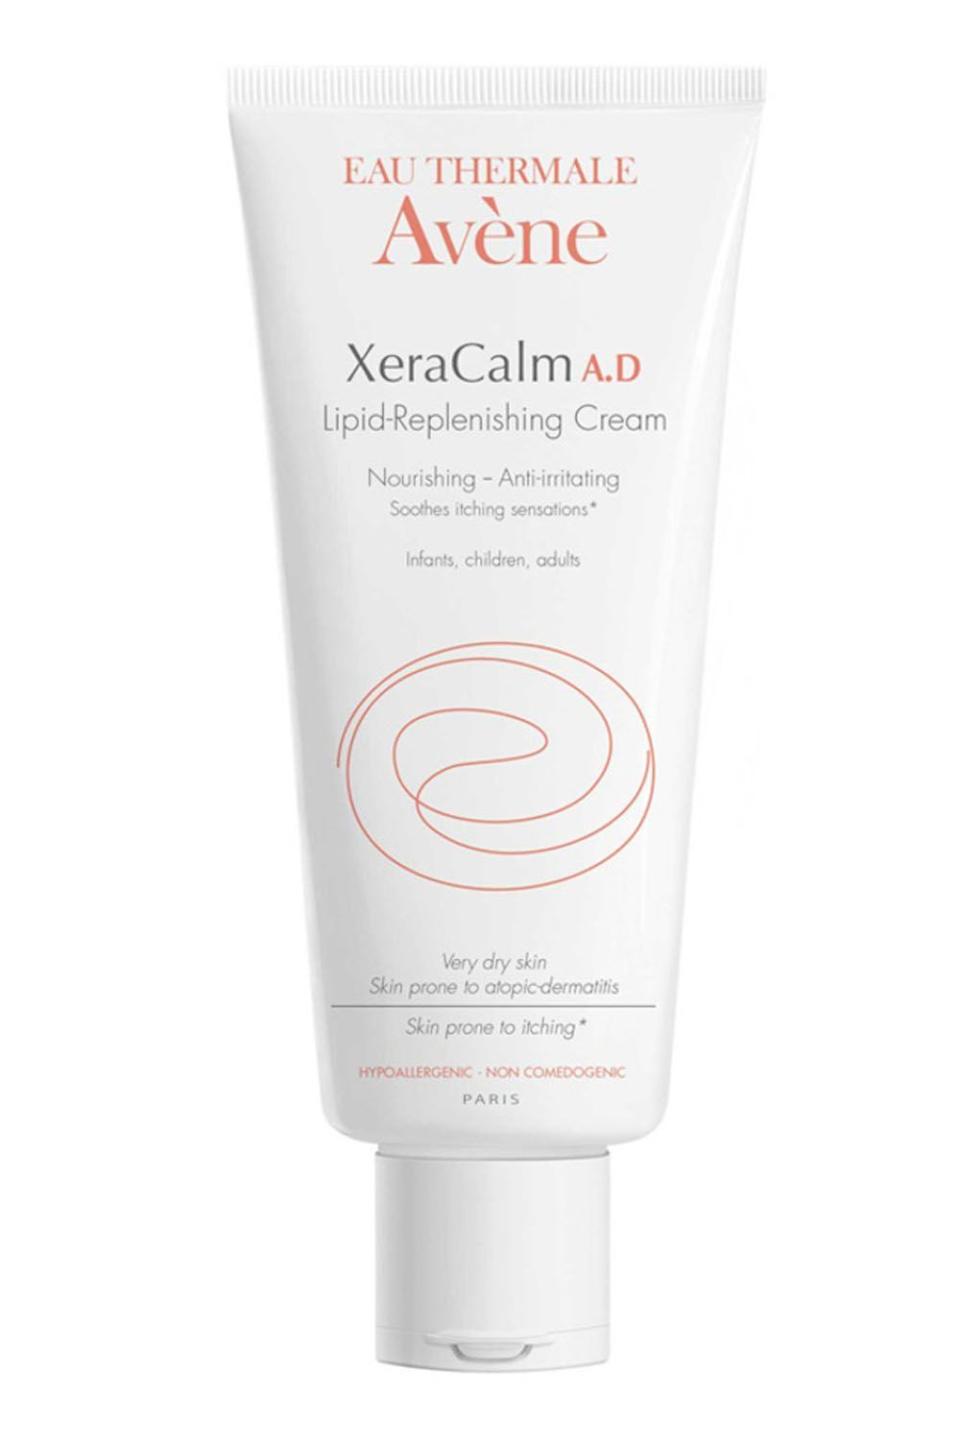 15) Avene XeraCalm A.D Lipid-Replenishing Cream